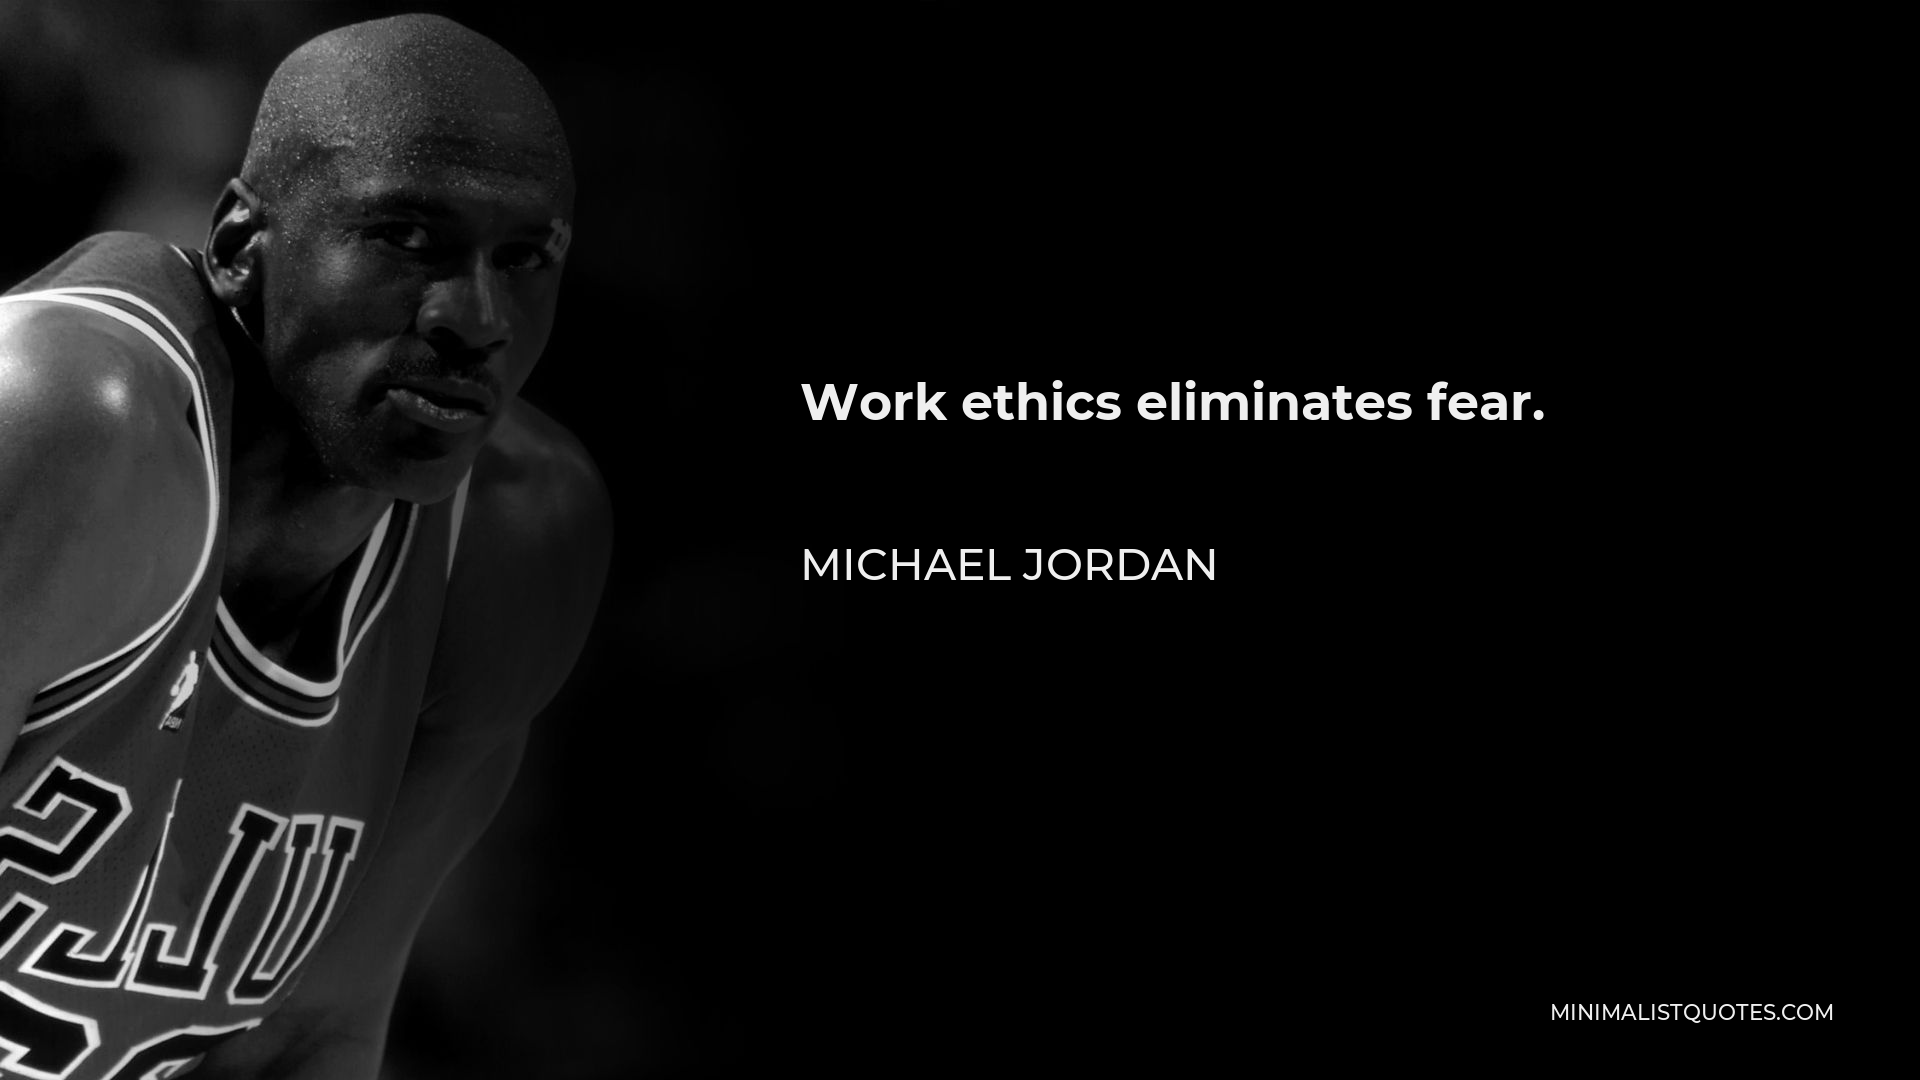 Michael Jordan Quote - Work ethics eliminates fear.